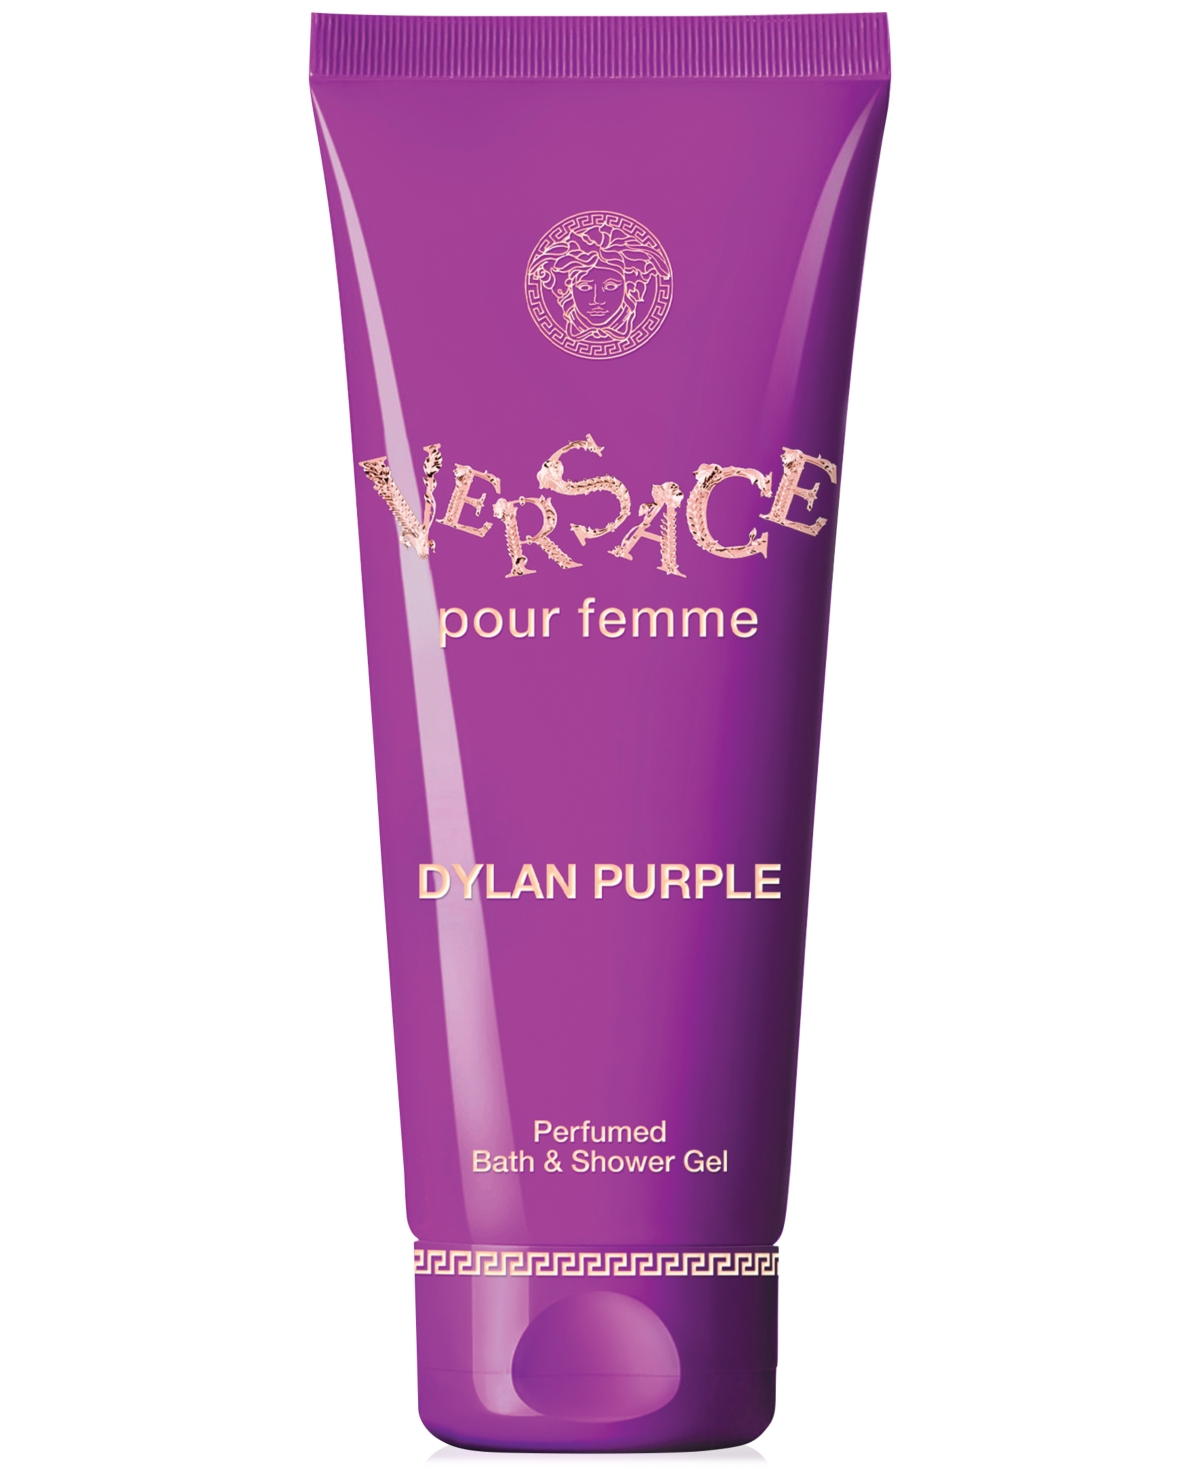 Shop Versace Dylan Purple Perfumed Bath & Shower Gel, 6.7 Oz.